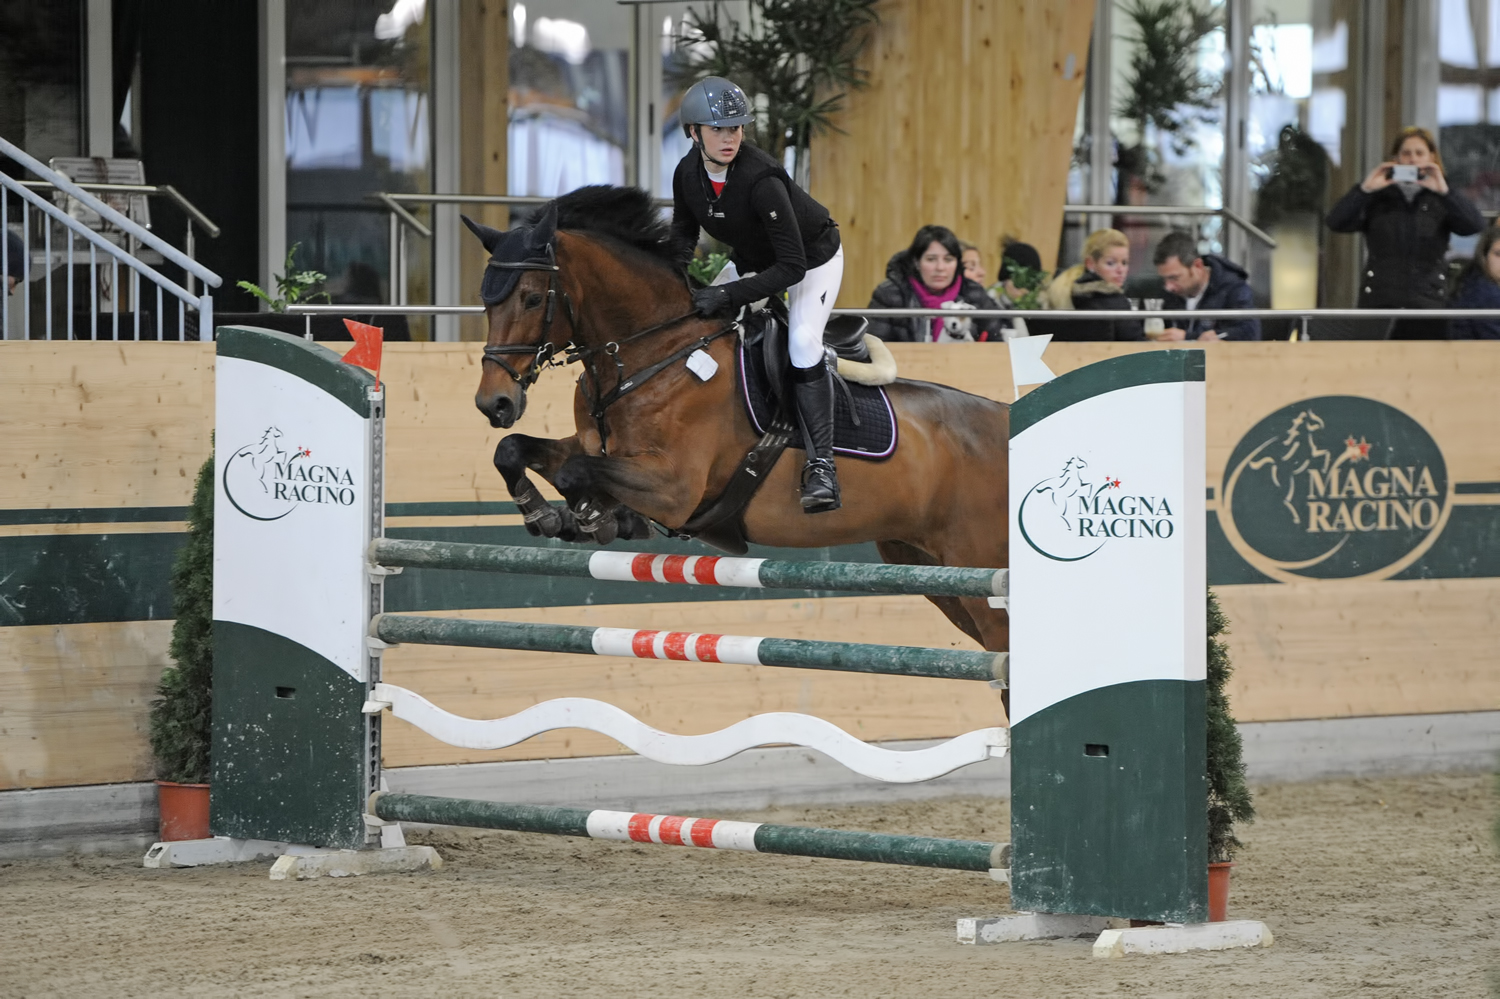 data/inhalt/events/2015/15154/Fotos horsesportsphoto Samstag/CupkovaKatarina_MrCatrik_BW07_CSI2Racino_chorsesportsphoto.eu.JPG